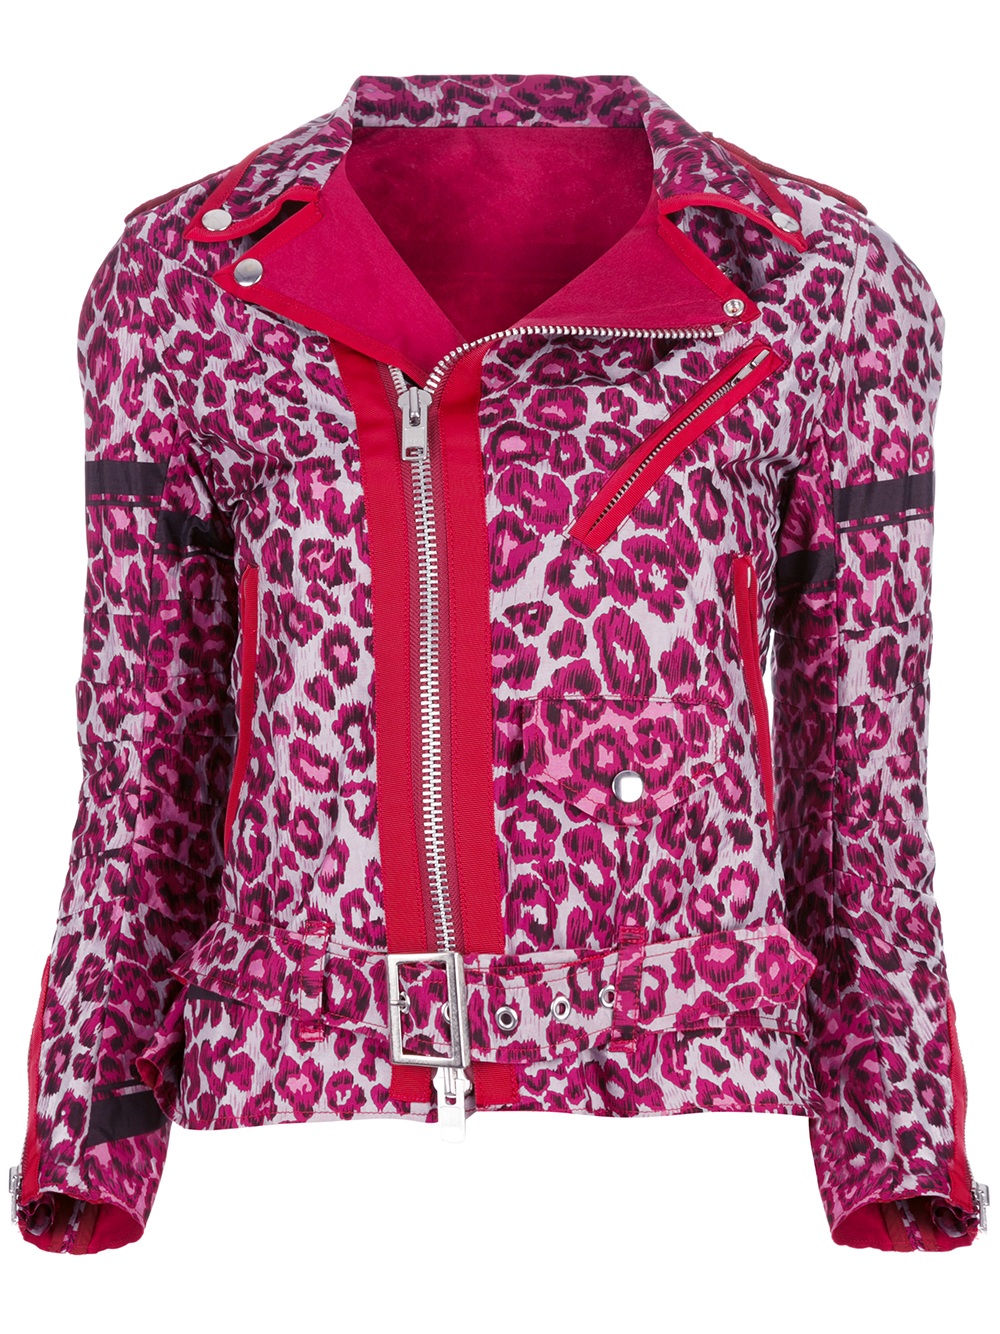 Sacai Leopard Print Biker Jacket in Pink - Lyst